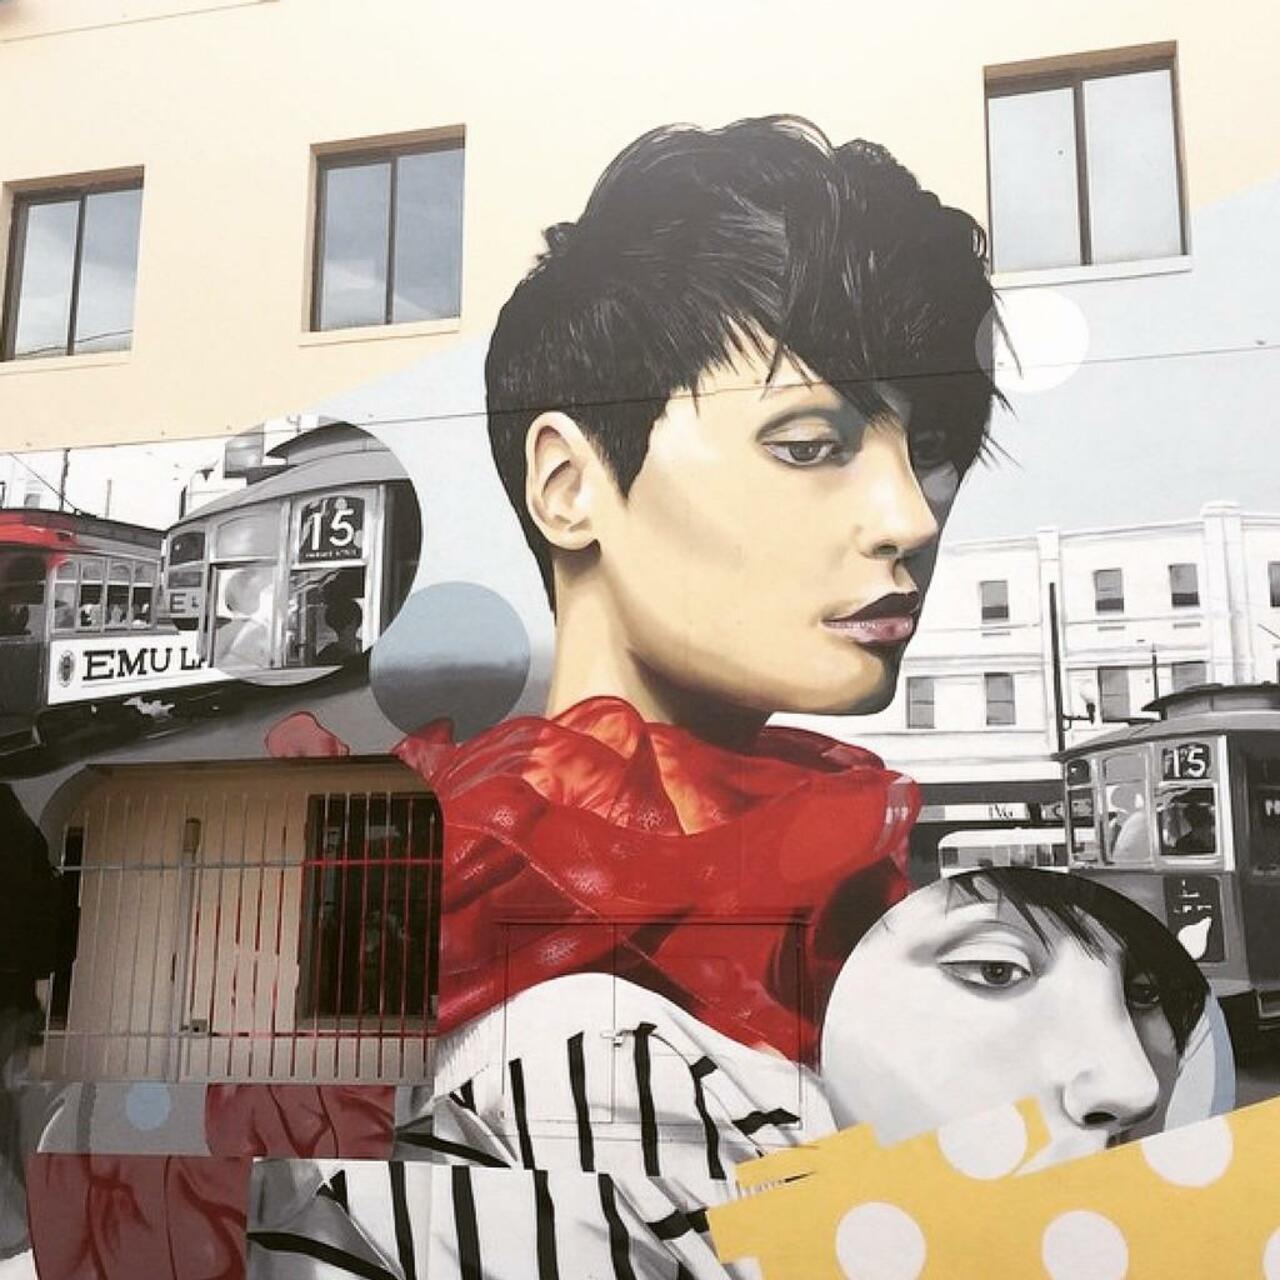 RT @streetcnina: #mural #graffiti #urbanart #StreetArt #murales #streetart http://t.co/SoWwy9kmkv